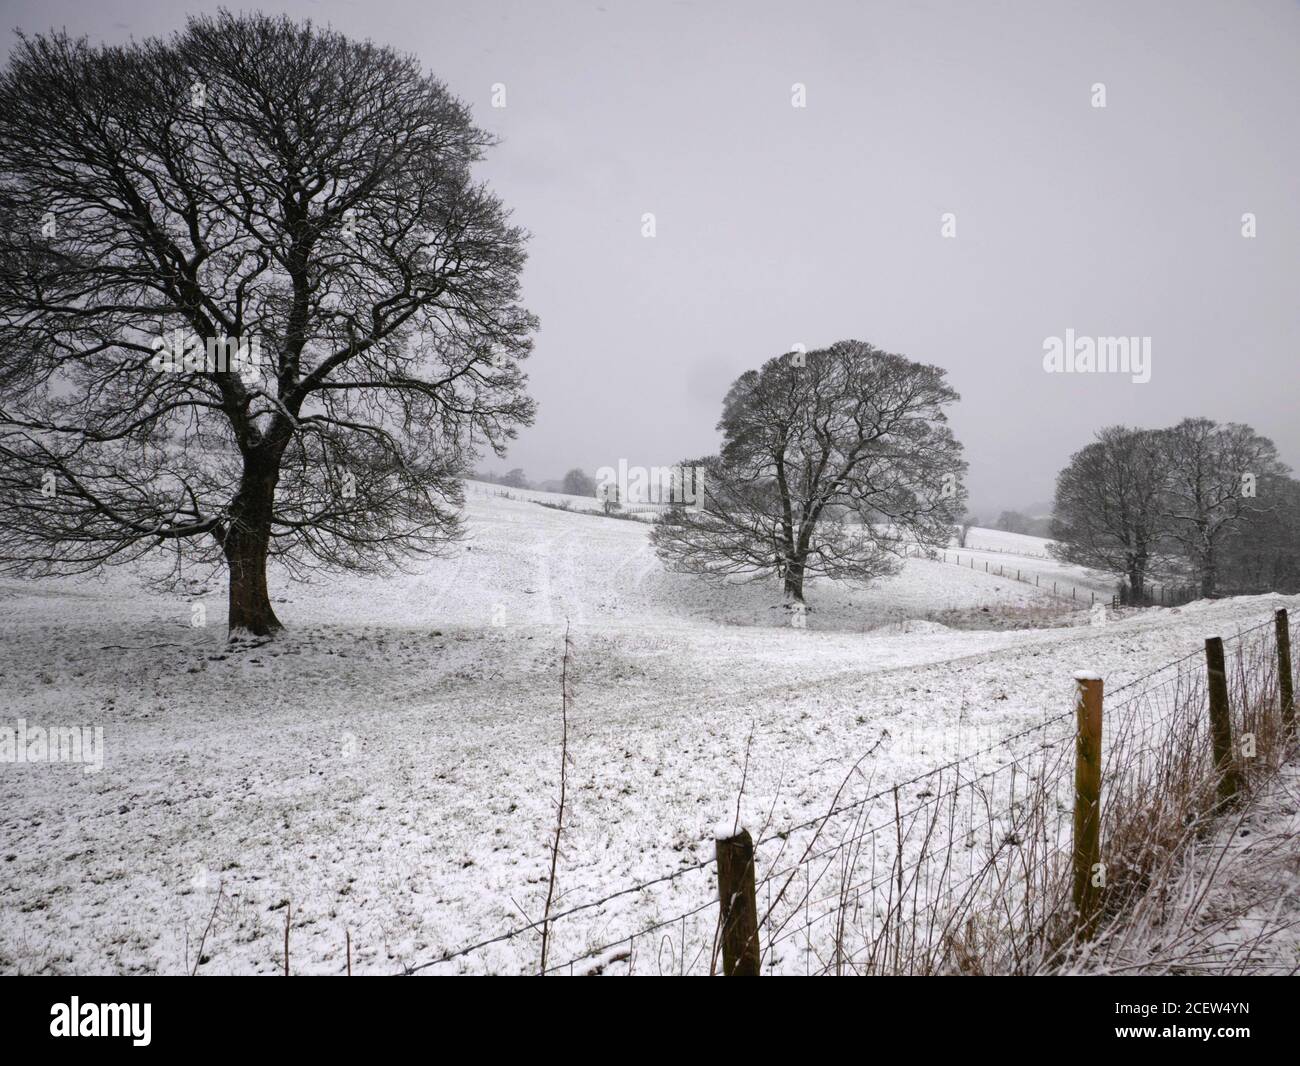 A snowy scene at Hill Lane, Burnley, Lancashire. Winter. Stock Photo